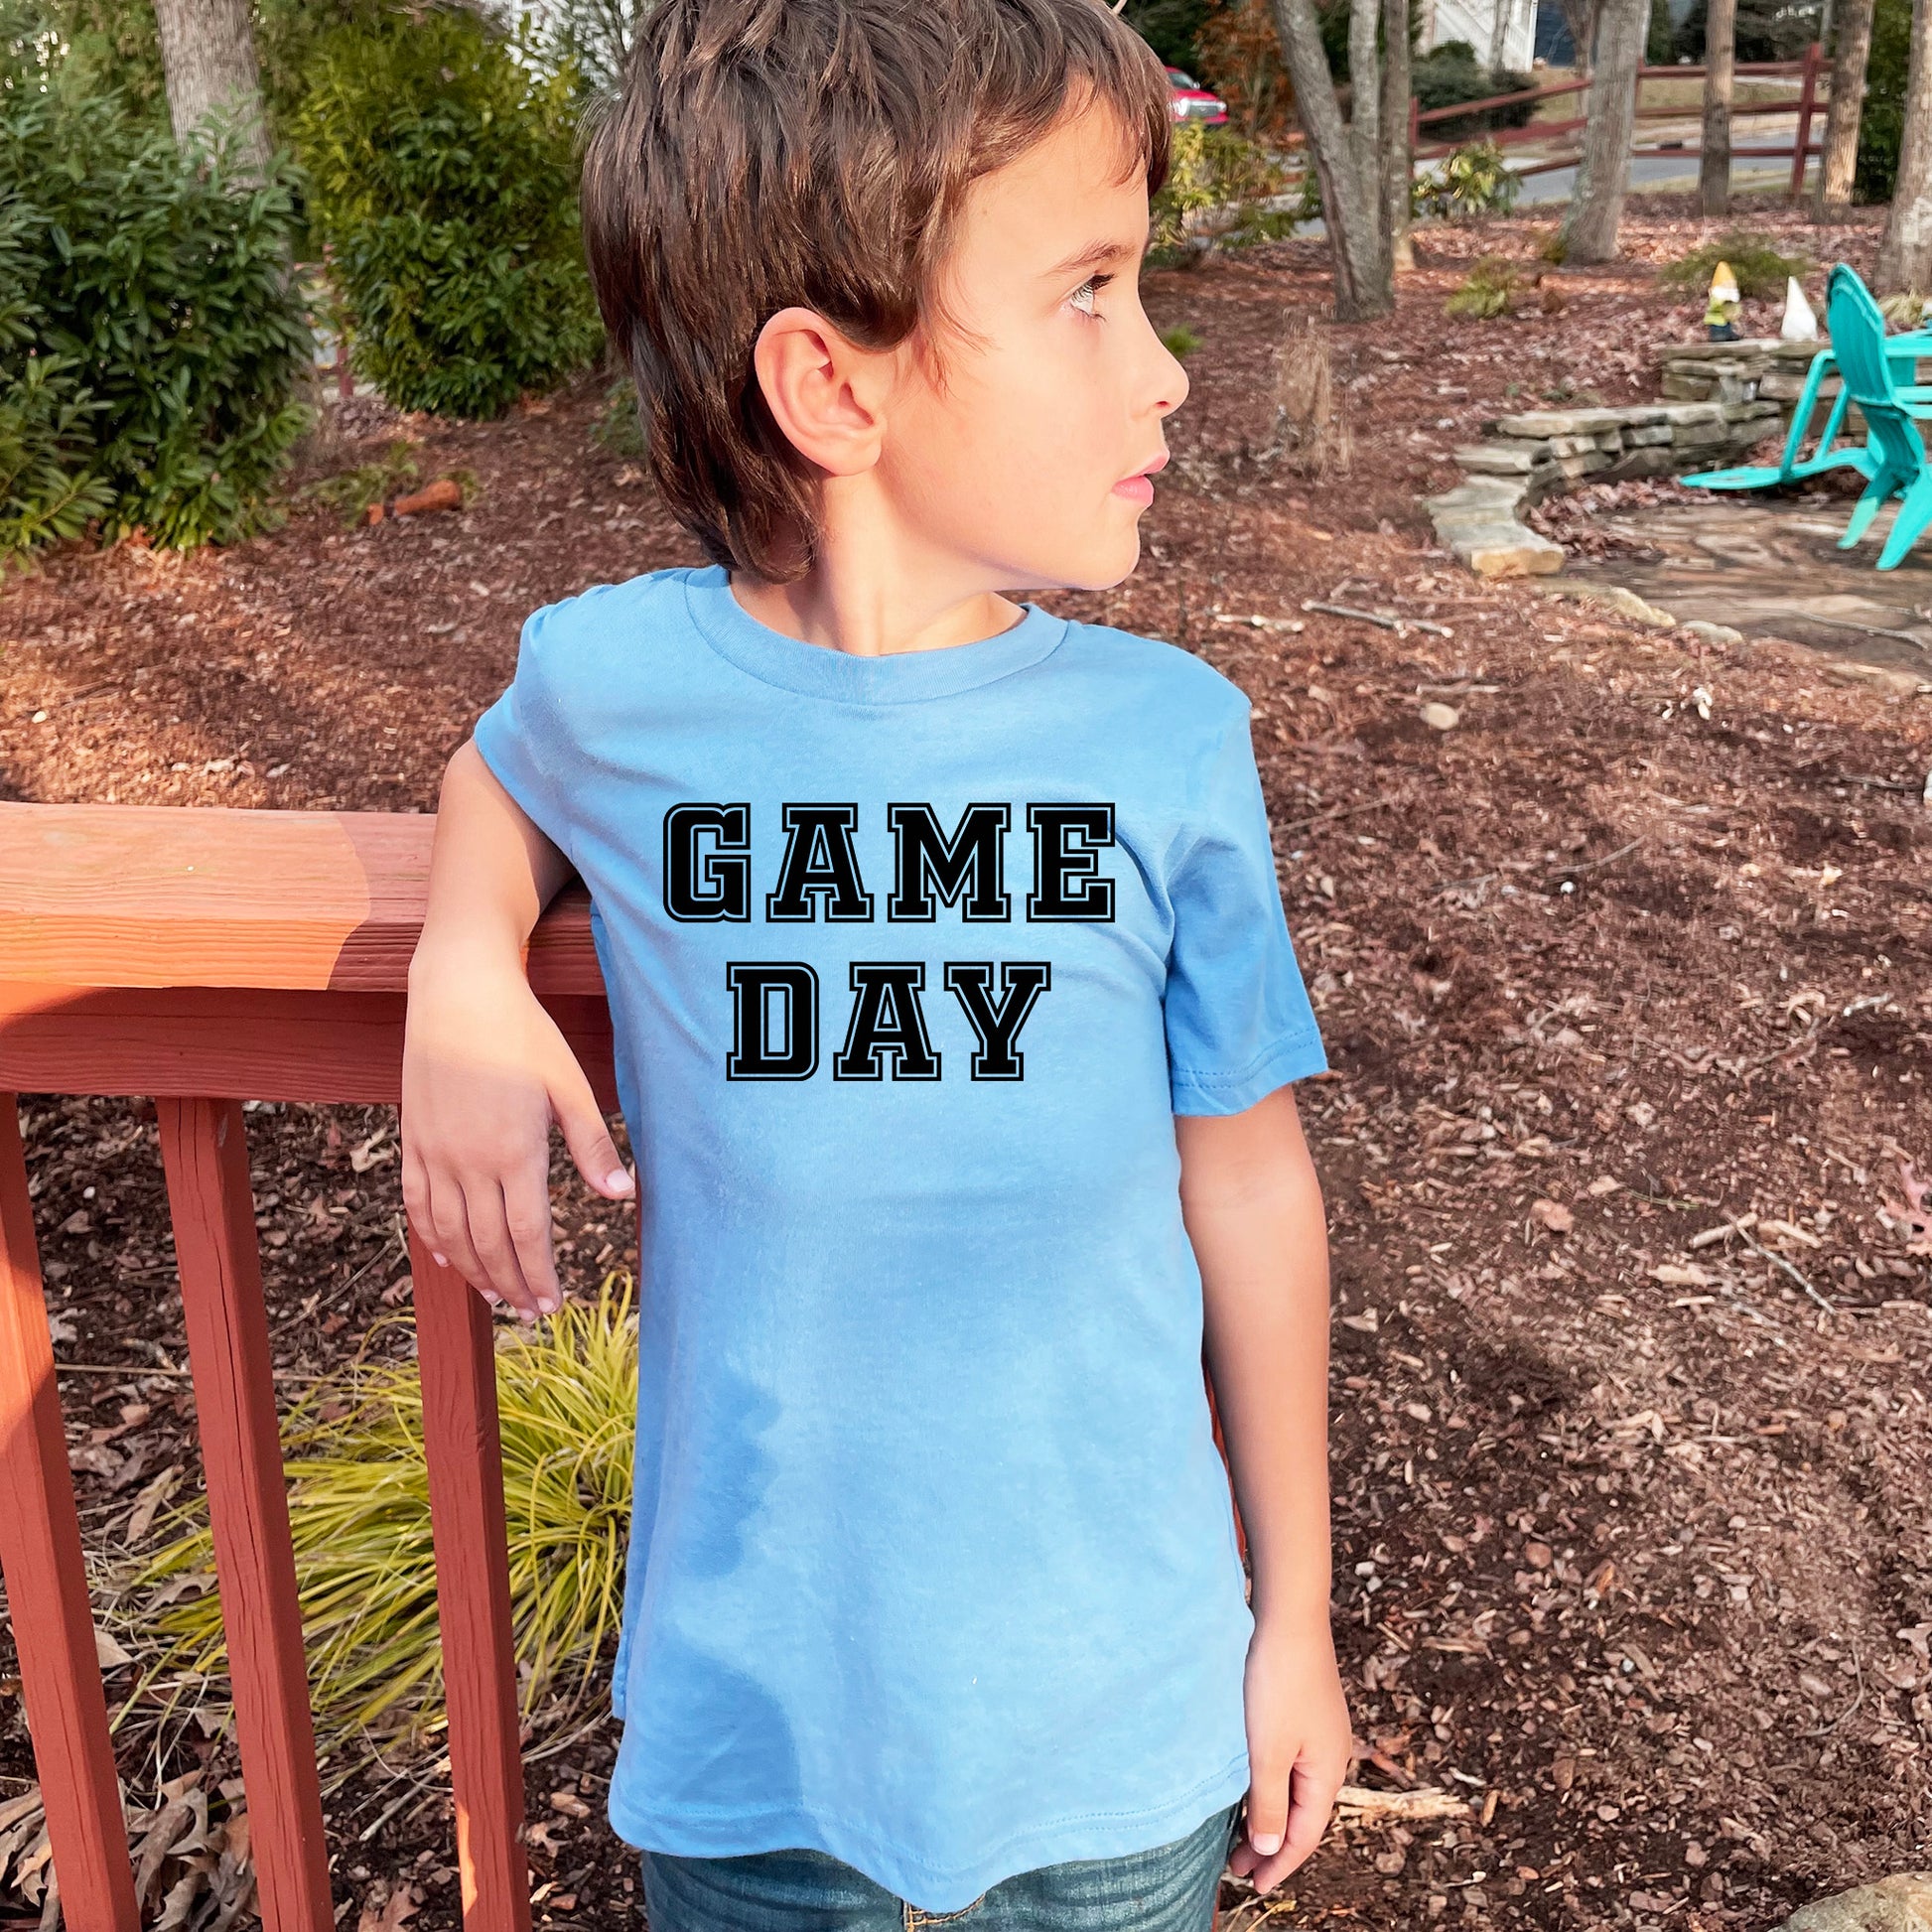 a young boy wearing a game day shirt